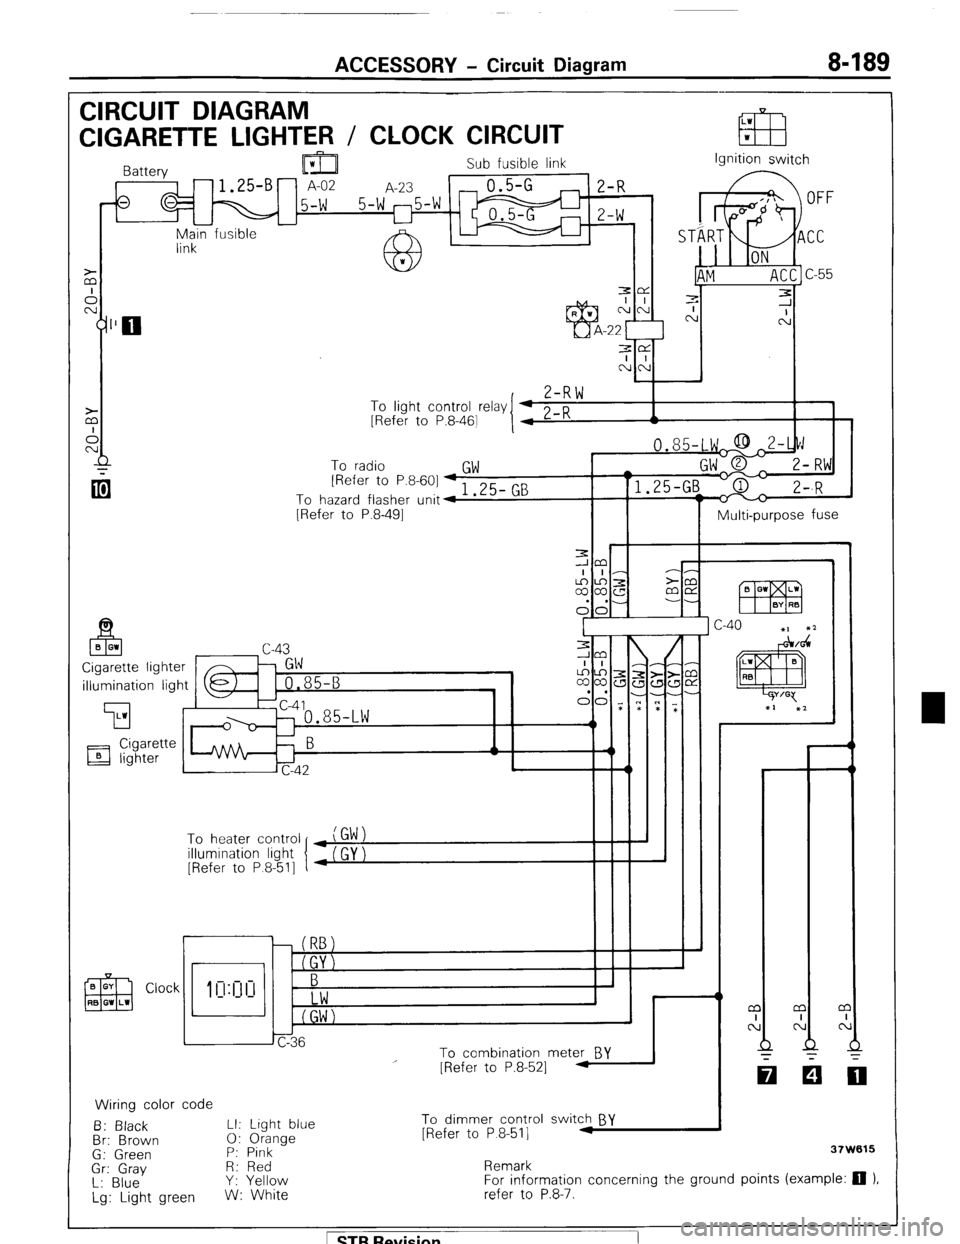 MITSUBISHI MONTERO 1987 1.G Workshop Manual ACCESSORY - Circuit Diagram 8-189 
CIRCUIT DIAGRAM 
LW 
CIGARETTE LIGHTER / CLOCK CIRCUIT EB w 
Sub fusible link 
,-fs q M 15-W 5-W 25-W m ;I; 
I I 
- 
Main fusible - 
link Ignition switch 
3e 
I I 
N